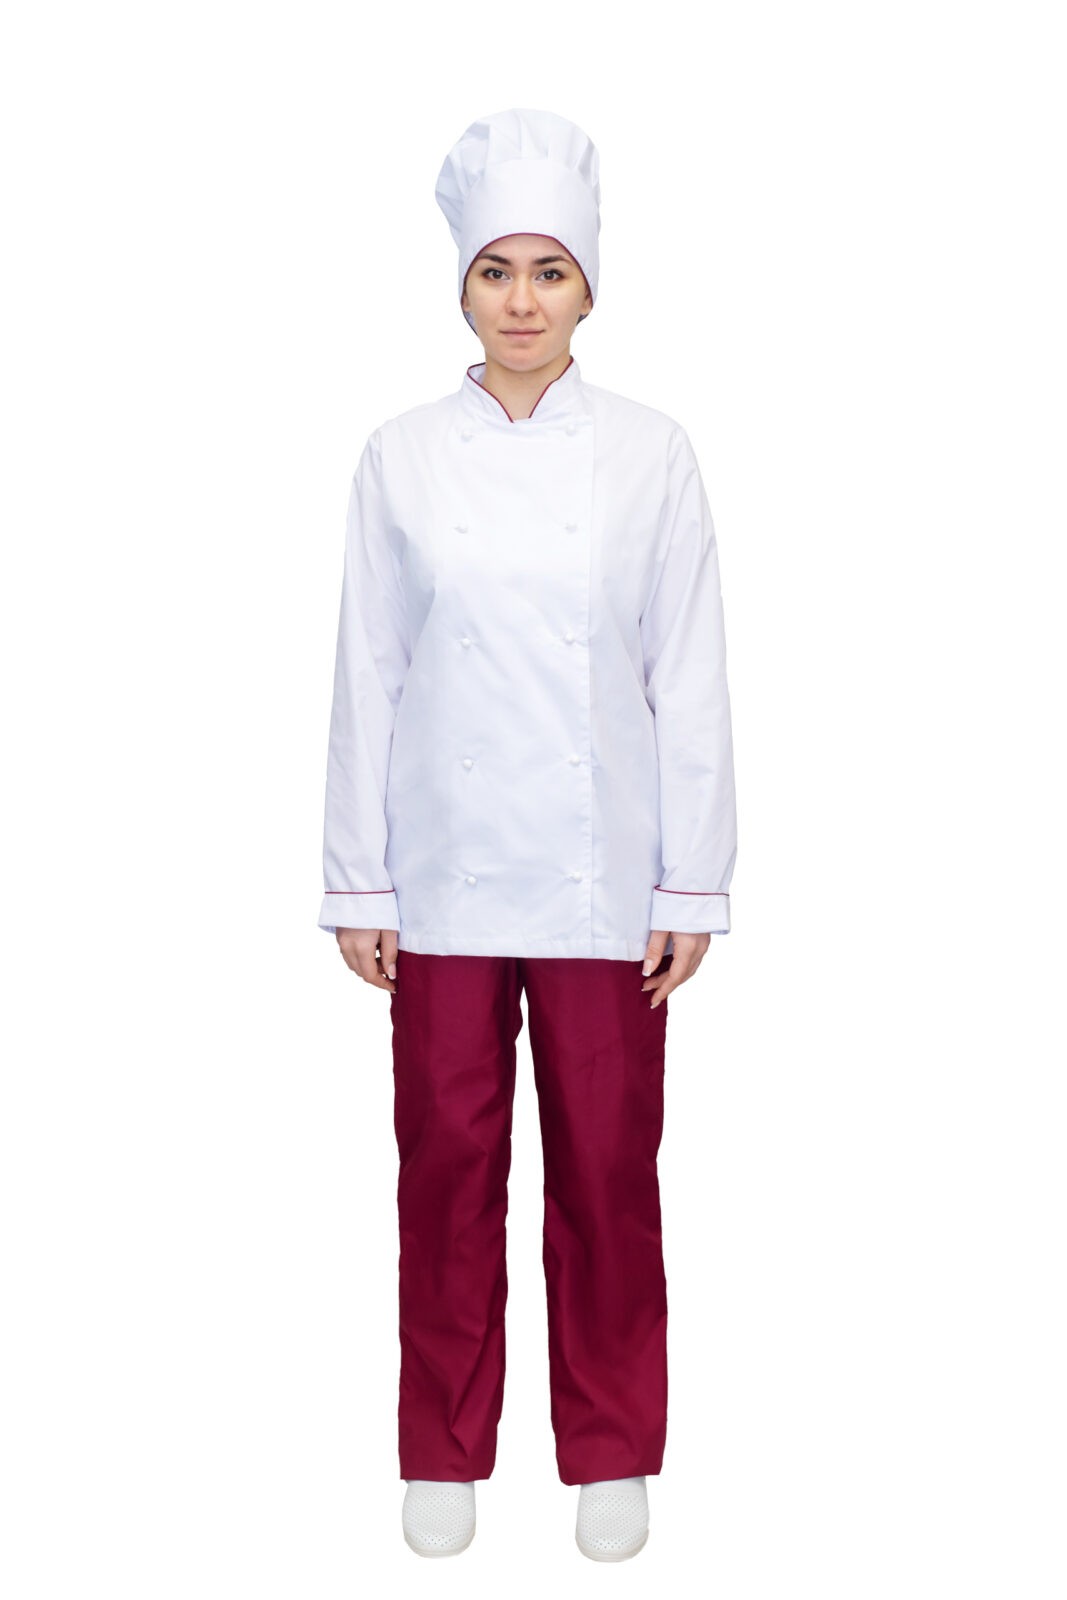 Женский костюм повара Гурман (белый/бордо) ткань ТиСи